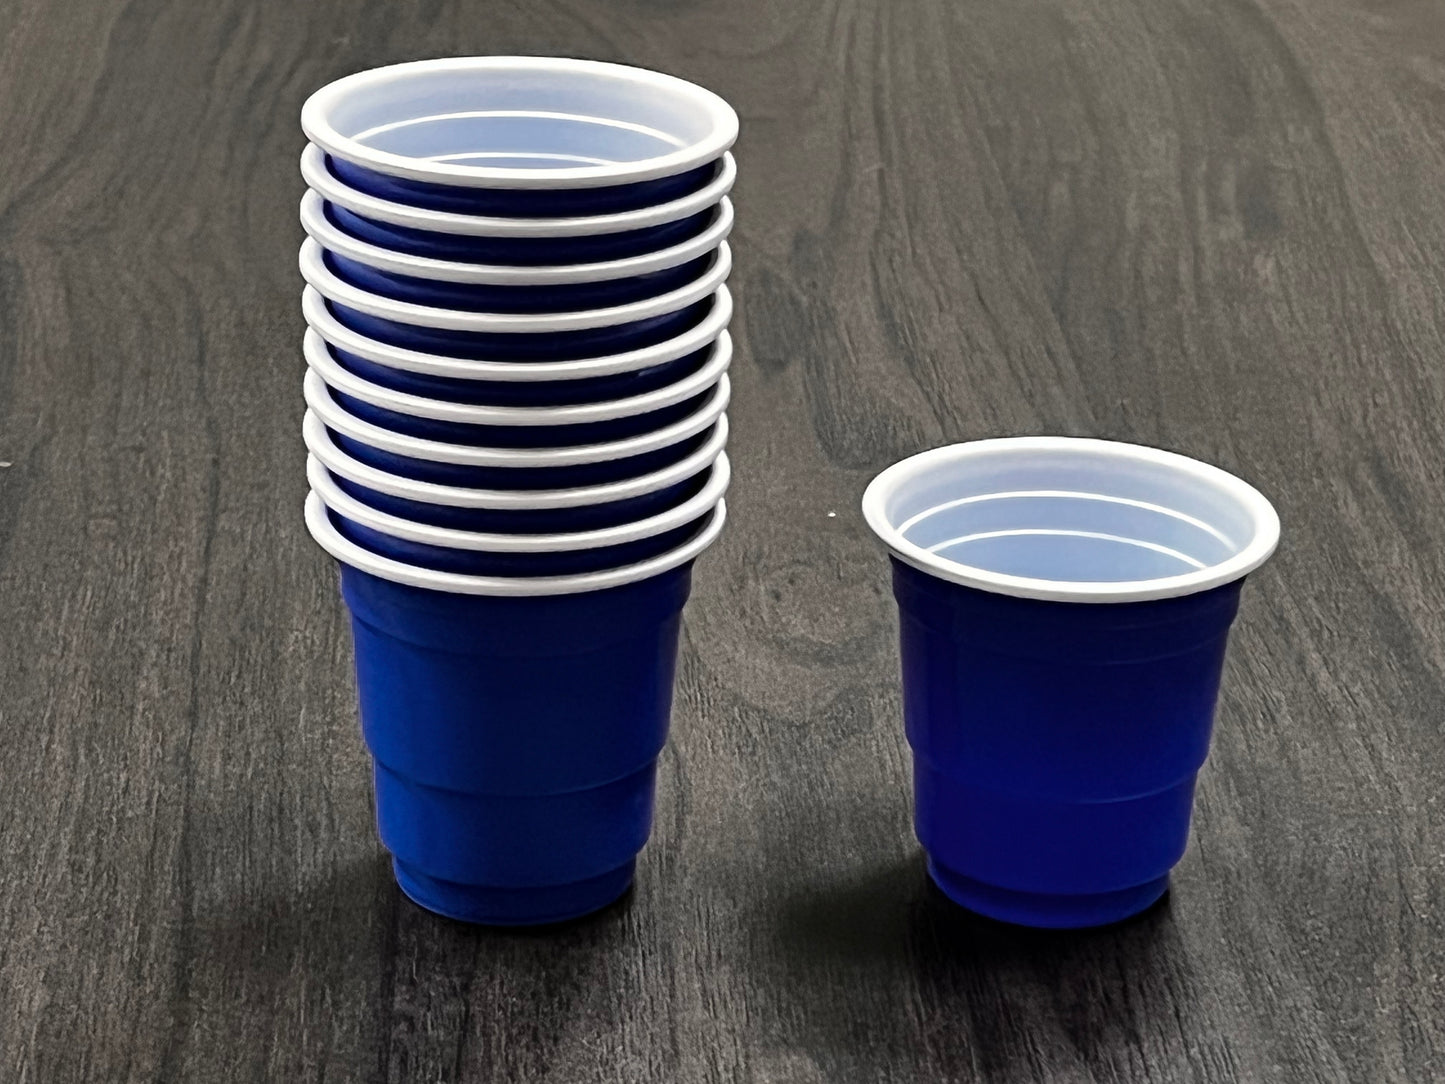 AnlarVo 2oz Blue Disposable Tasting Cups, 100 pack